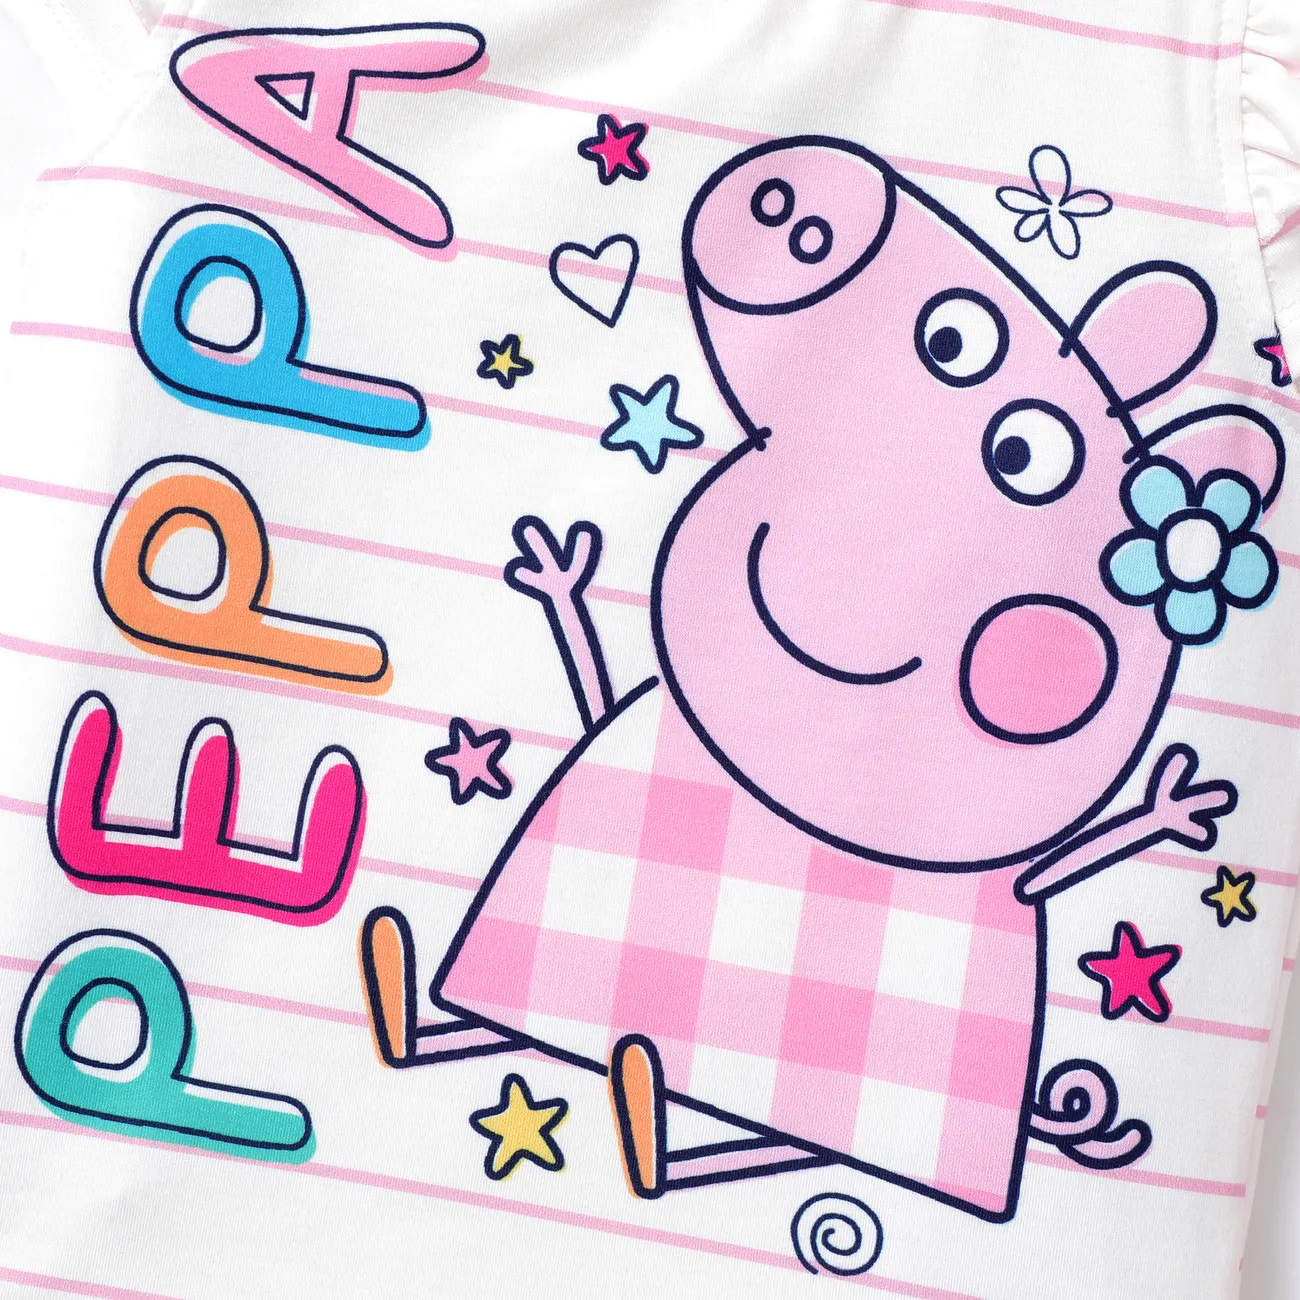 Peppa Pig Toddler Girl Summer Fruit Print Top with Lovely Pants Set
 Pink big image 1